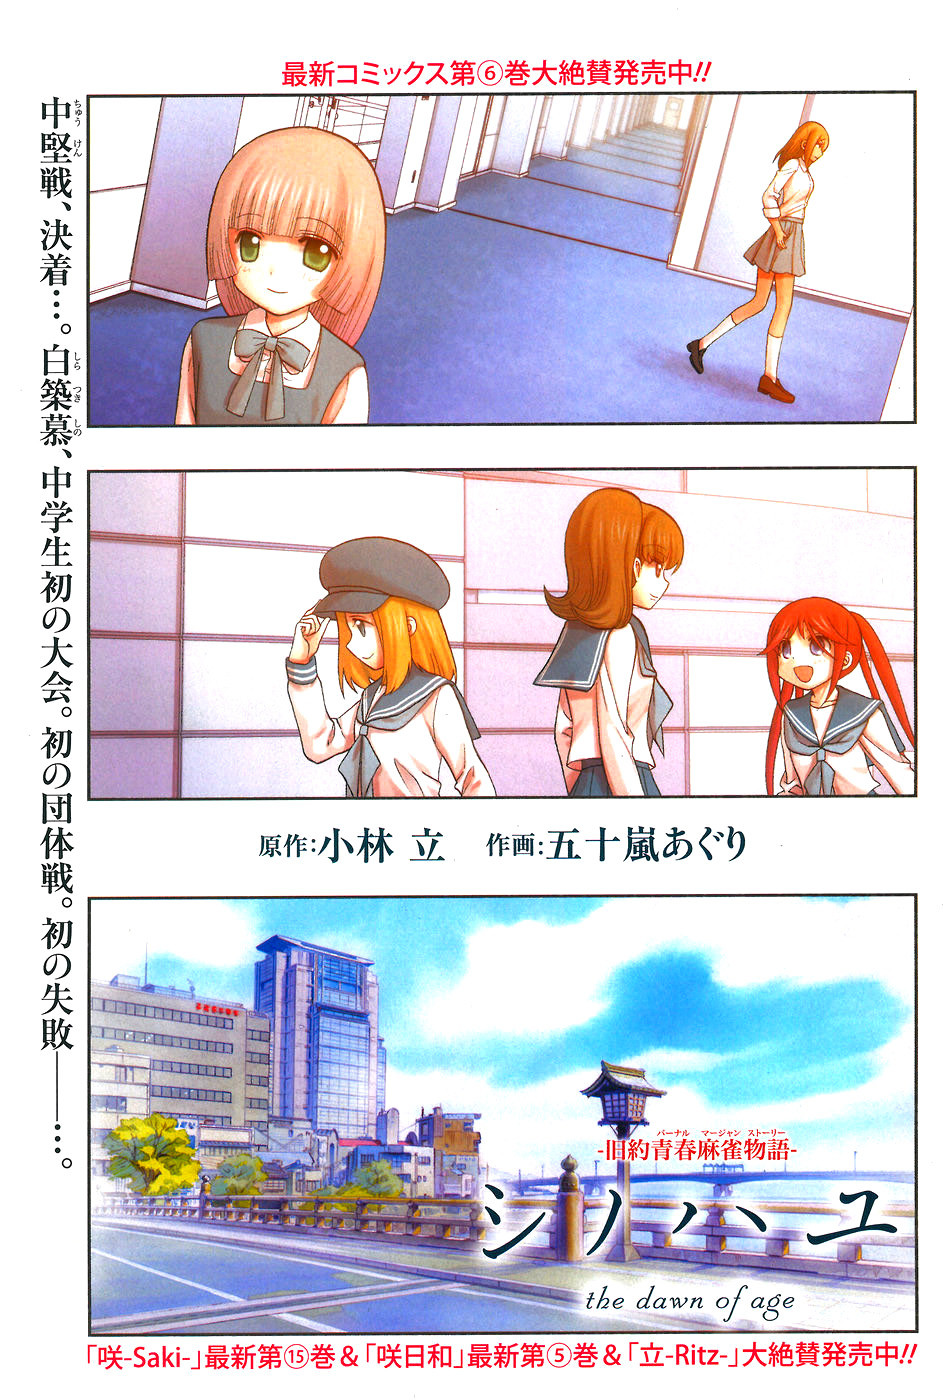 Shinohayu - The Dawn of Age Manga - Chapter 034 - Page 1